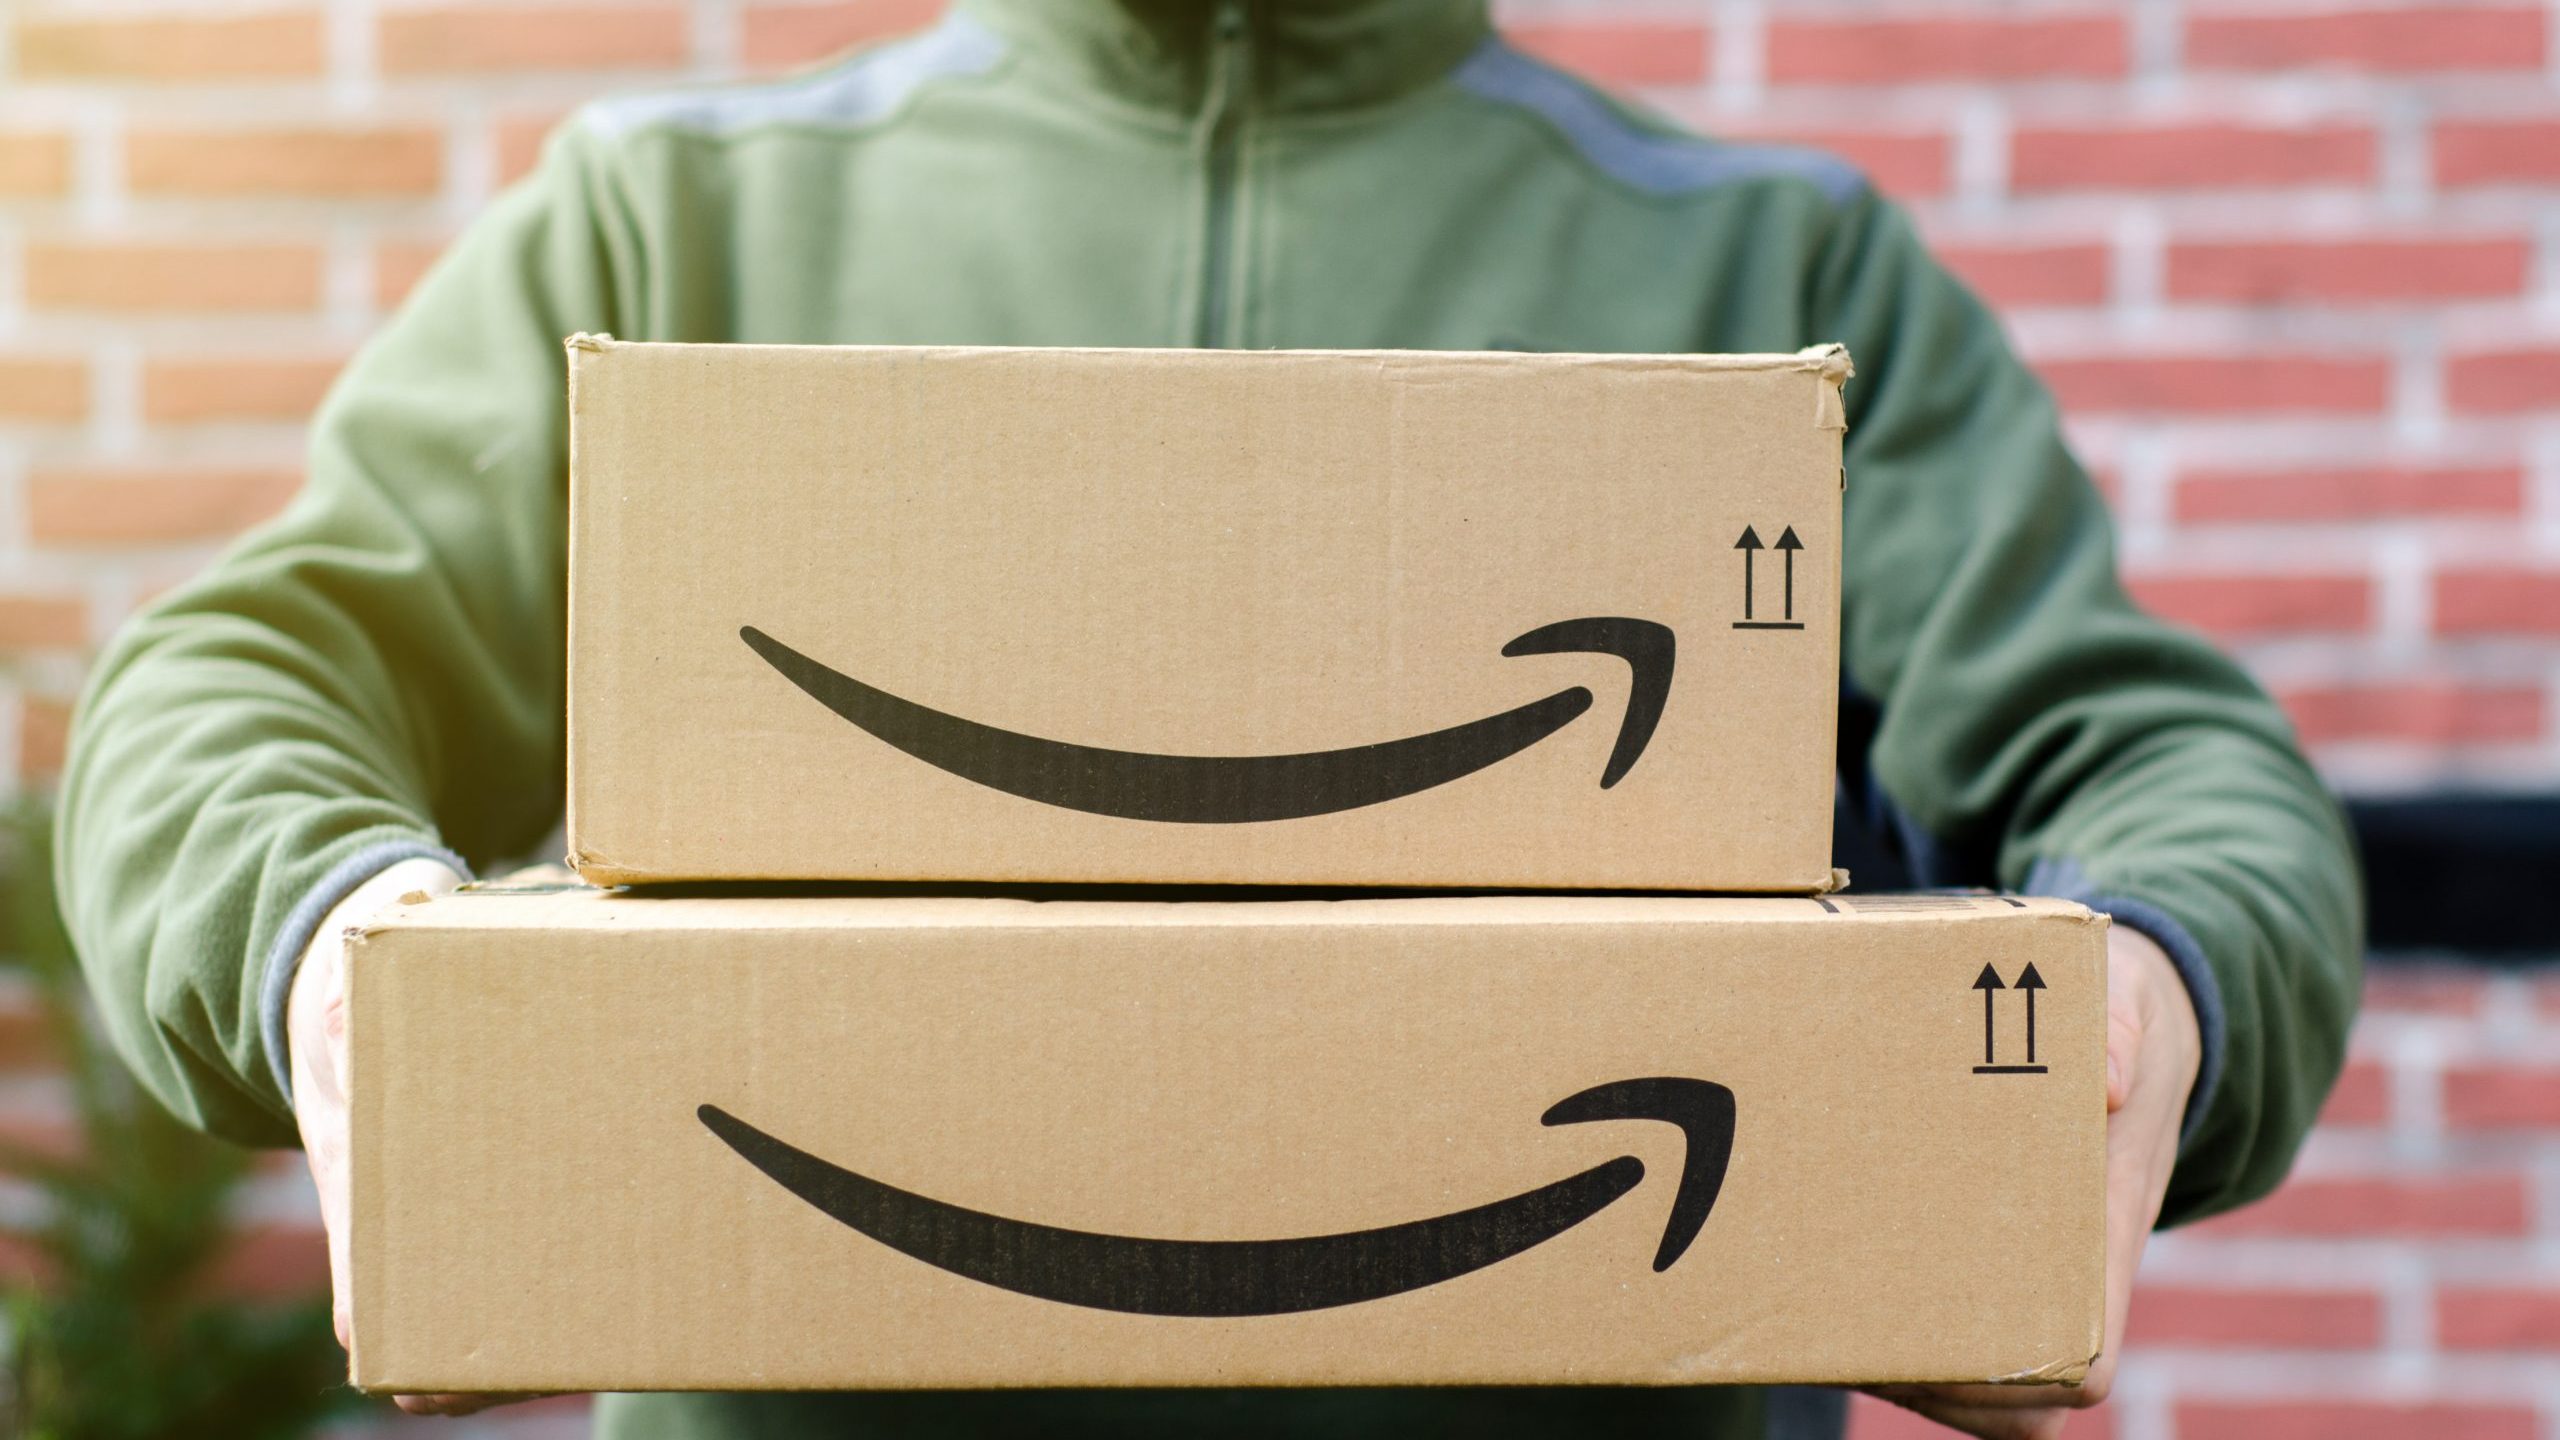 Man holds Amazon boxes